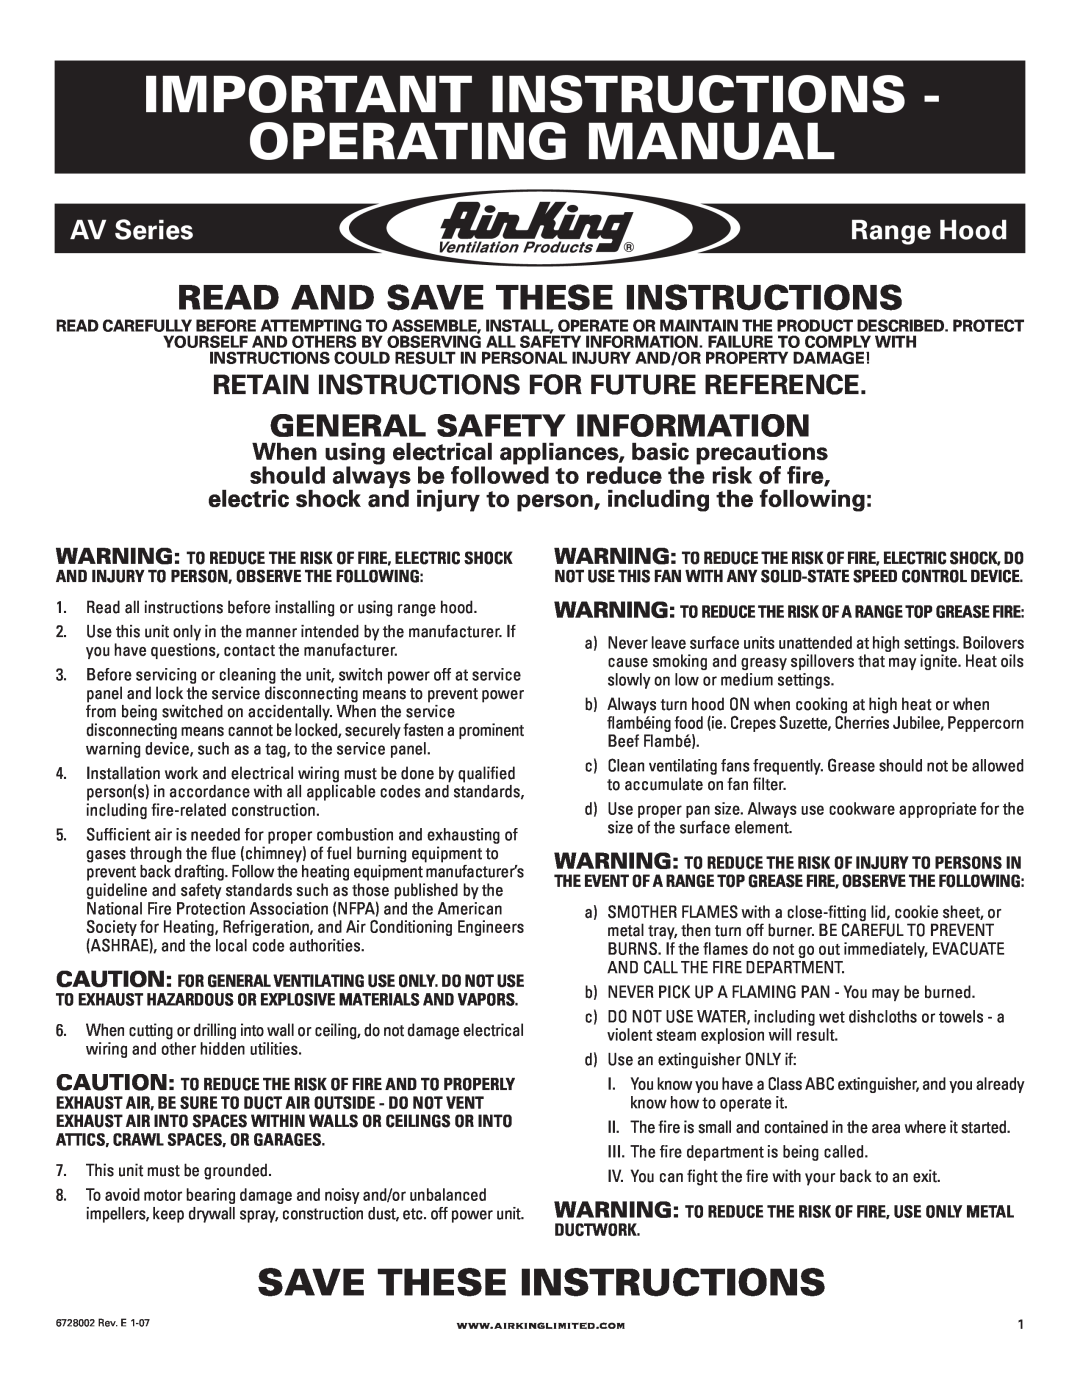 Air King Ventilation Hood manual Important Instructions Operating Manual, Save These Instructions, AV Series, Range Hood 